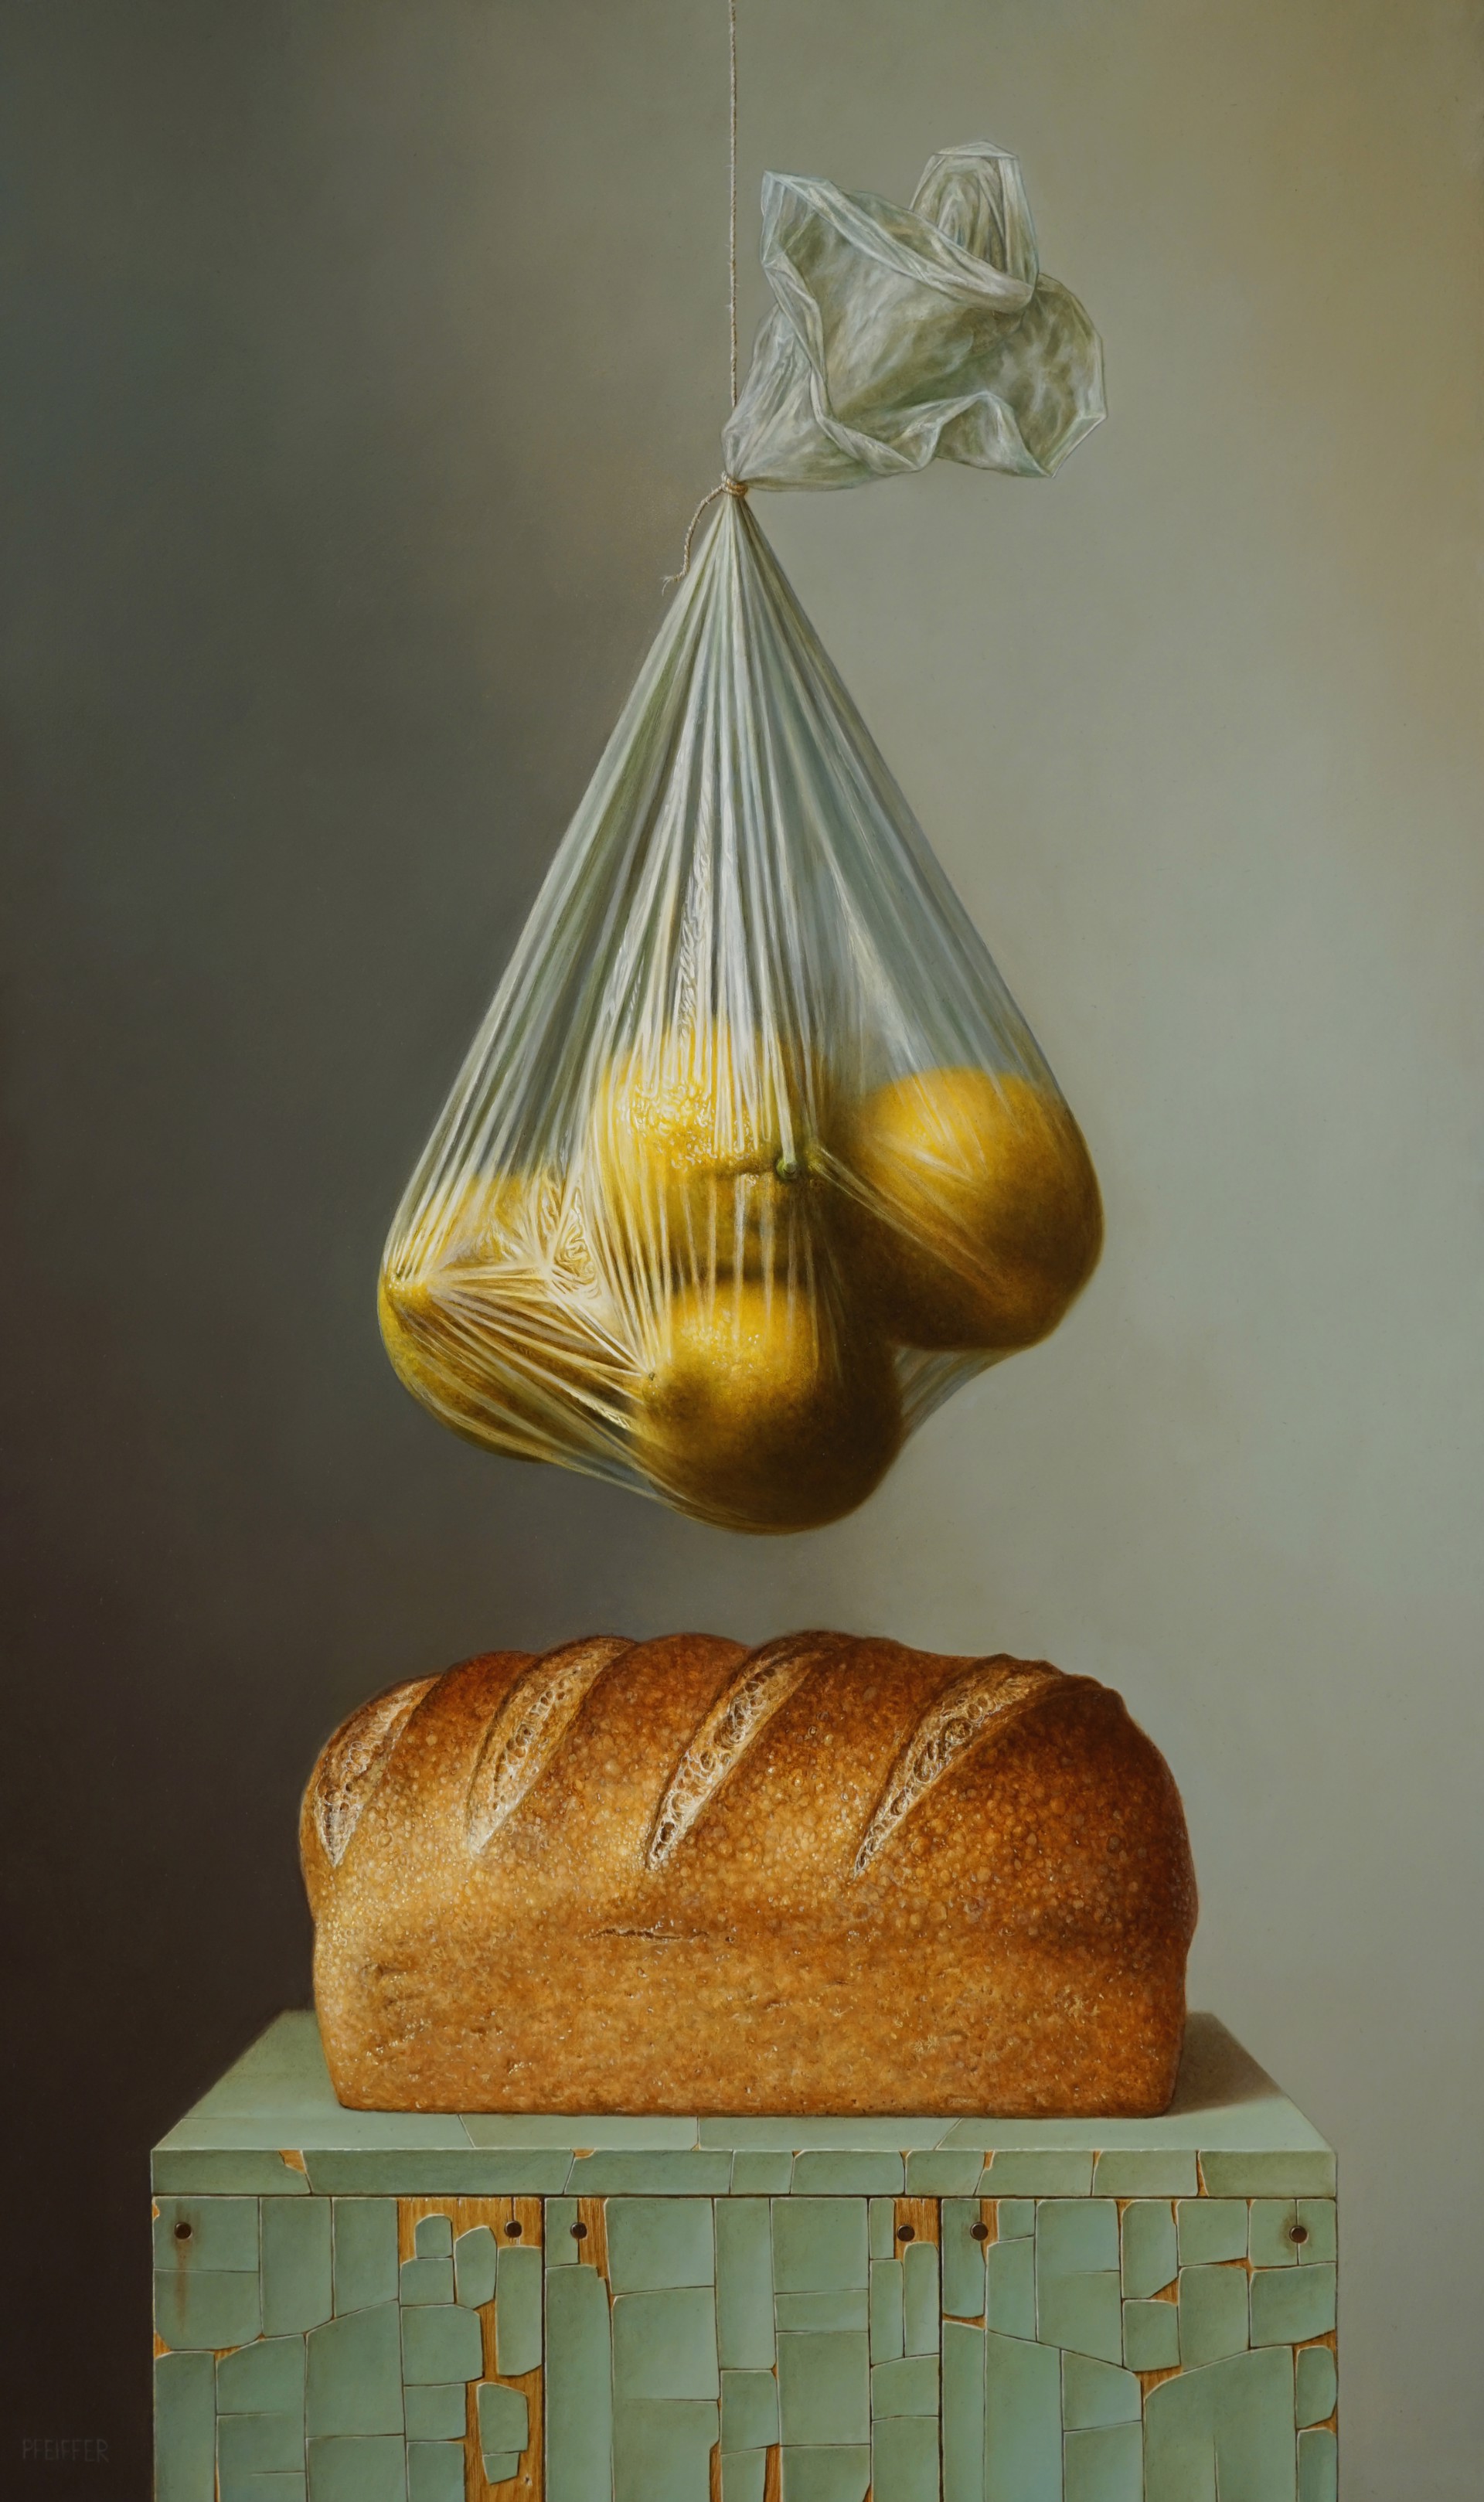 Sour Dough by Jacob A. Pfeiffer